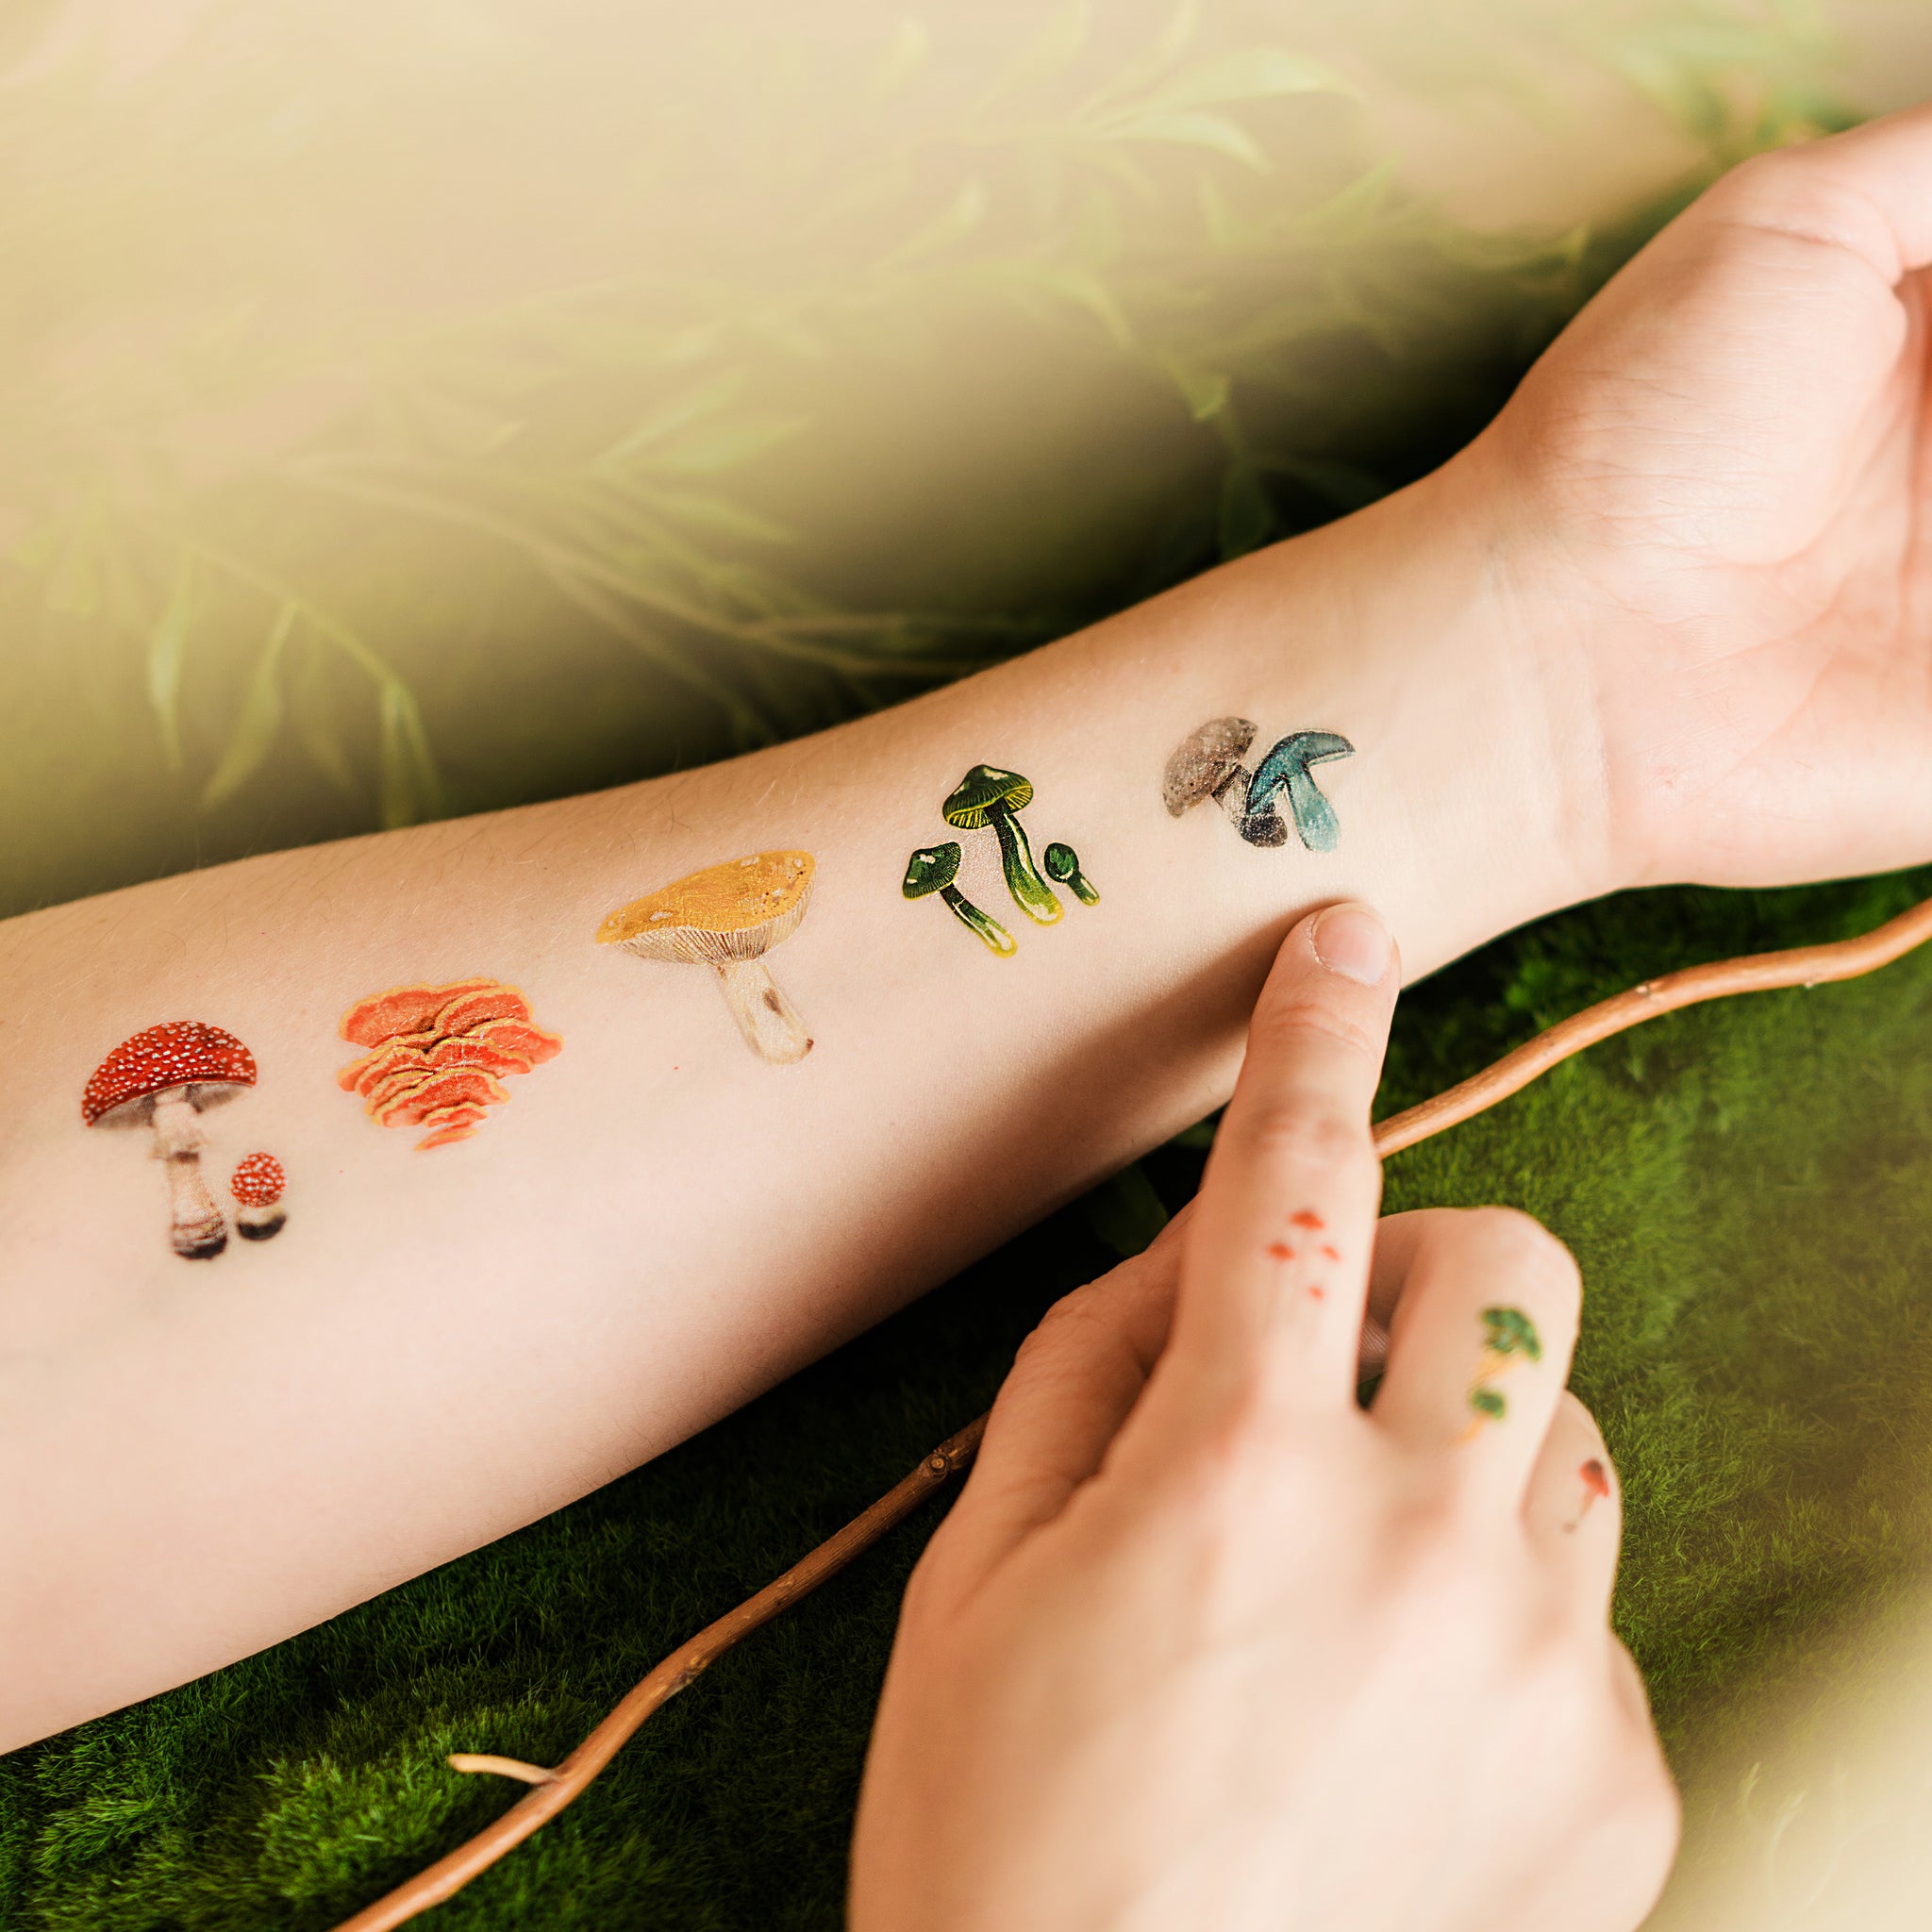 5423 Mushrooms Tattoo Images Stock Photos  Vectors  Shutterstock